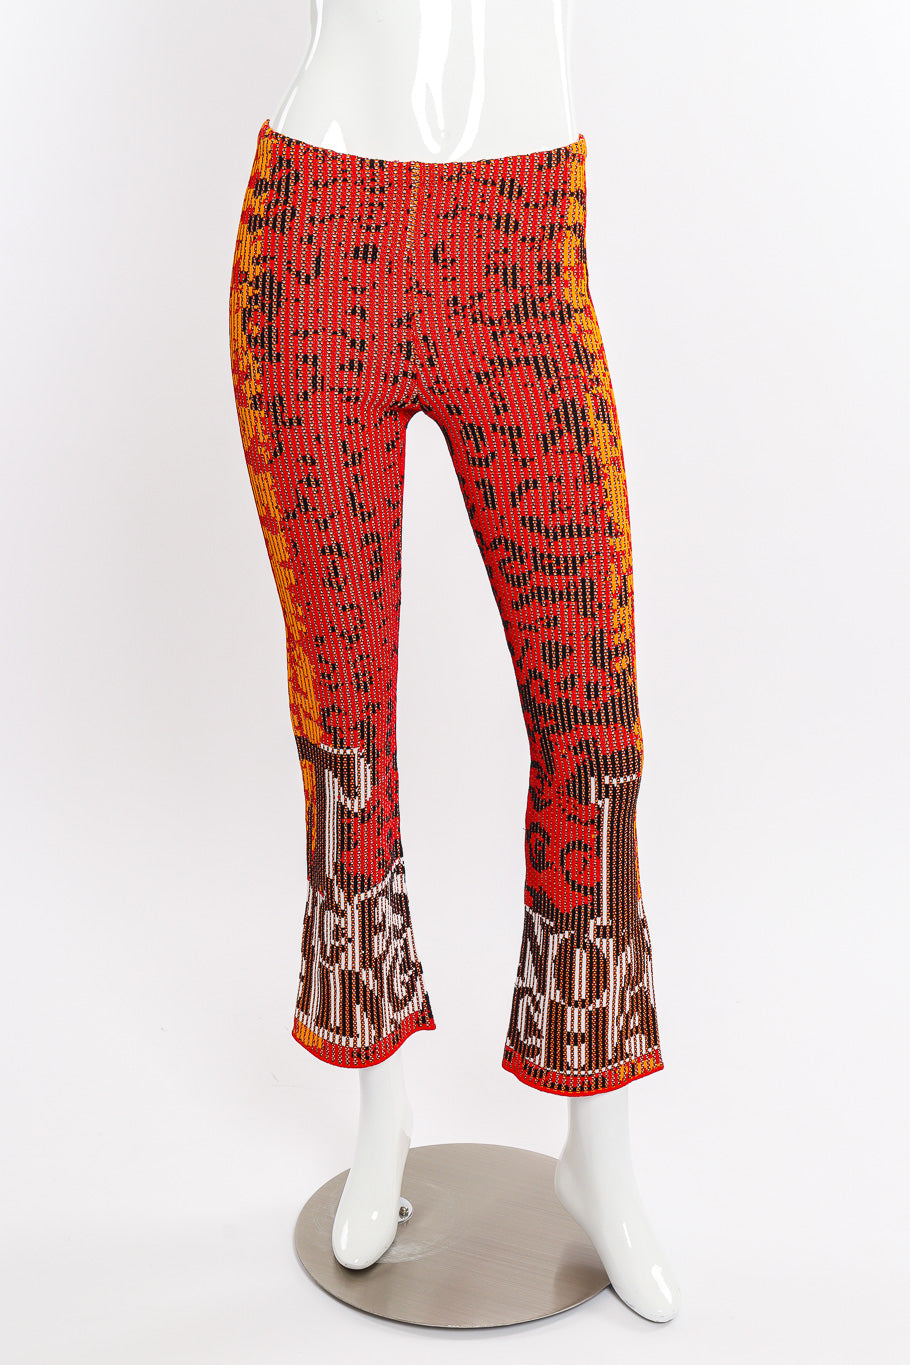 Rudi Gernreich 2018 F/W Graphic Knit Pant front view on mannequin @Recessla